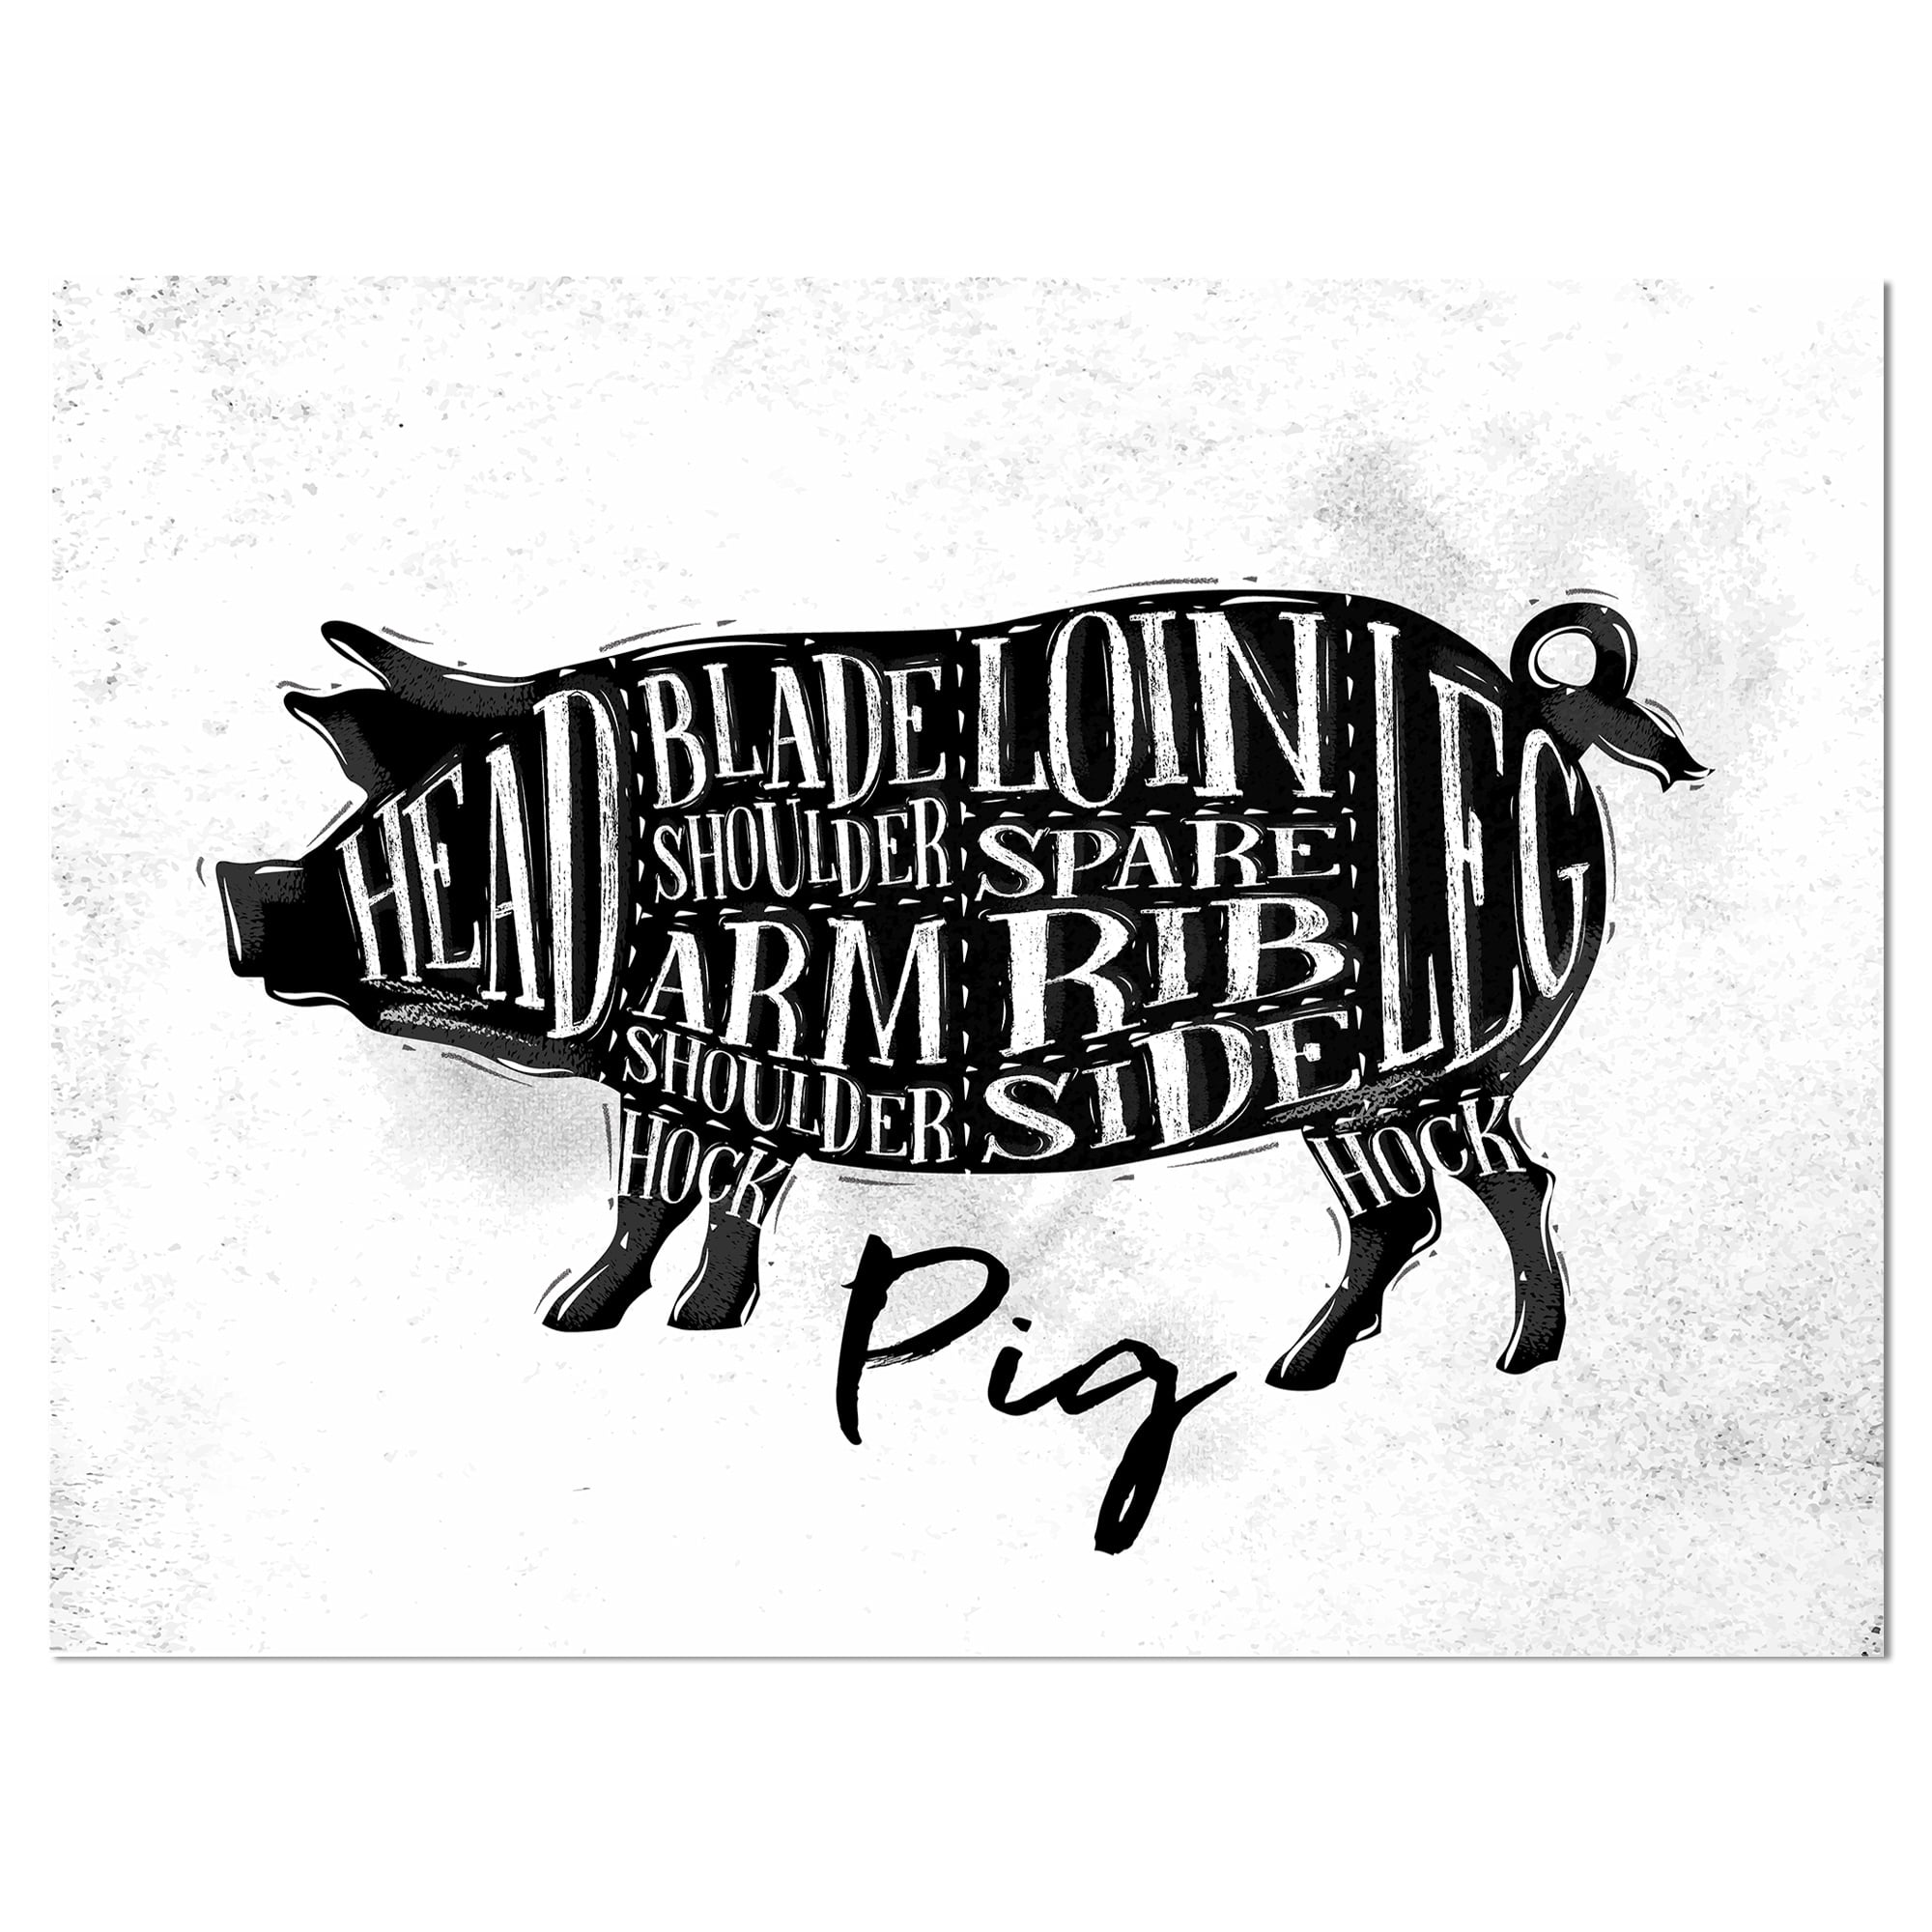 Pictures Pigs Pig Photograph Black White Photography Farmhouse Decor Rustic Fine Art Print Farm Country